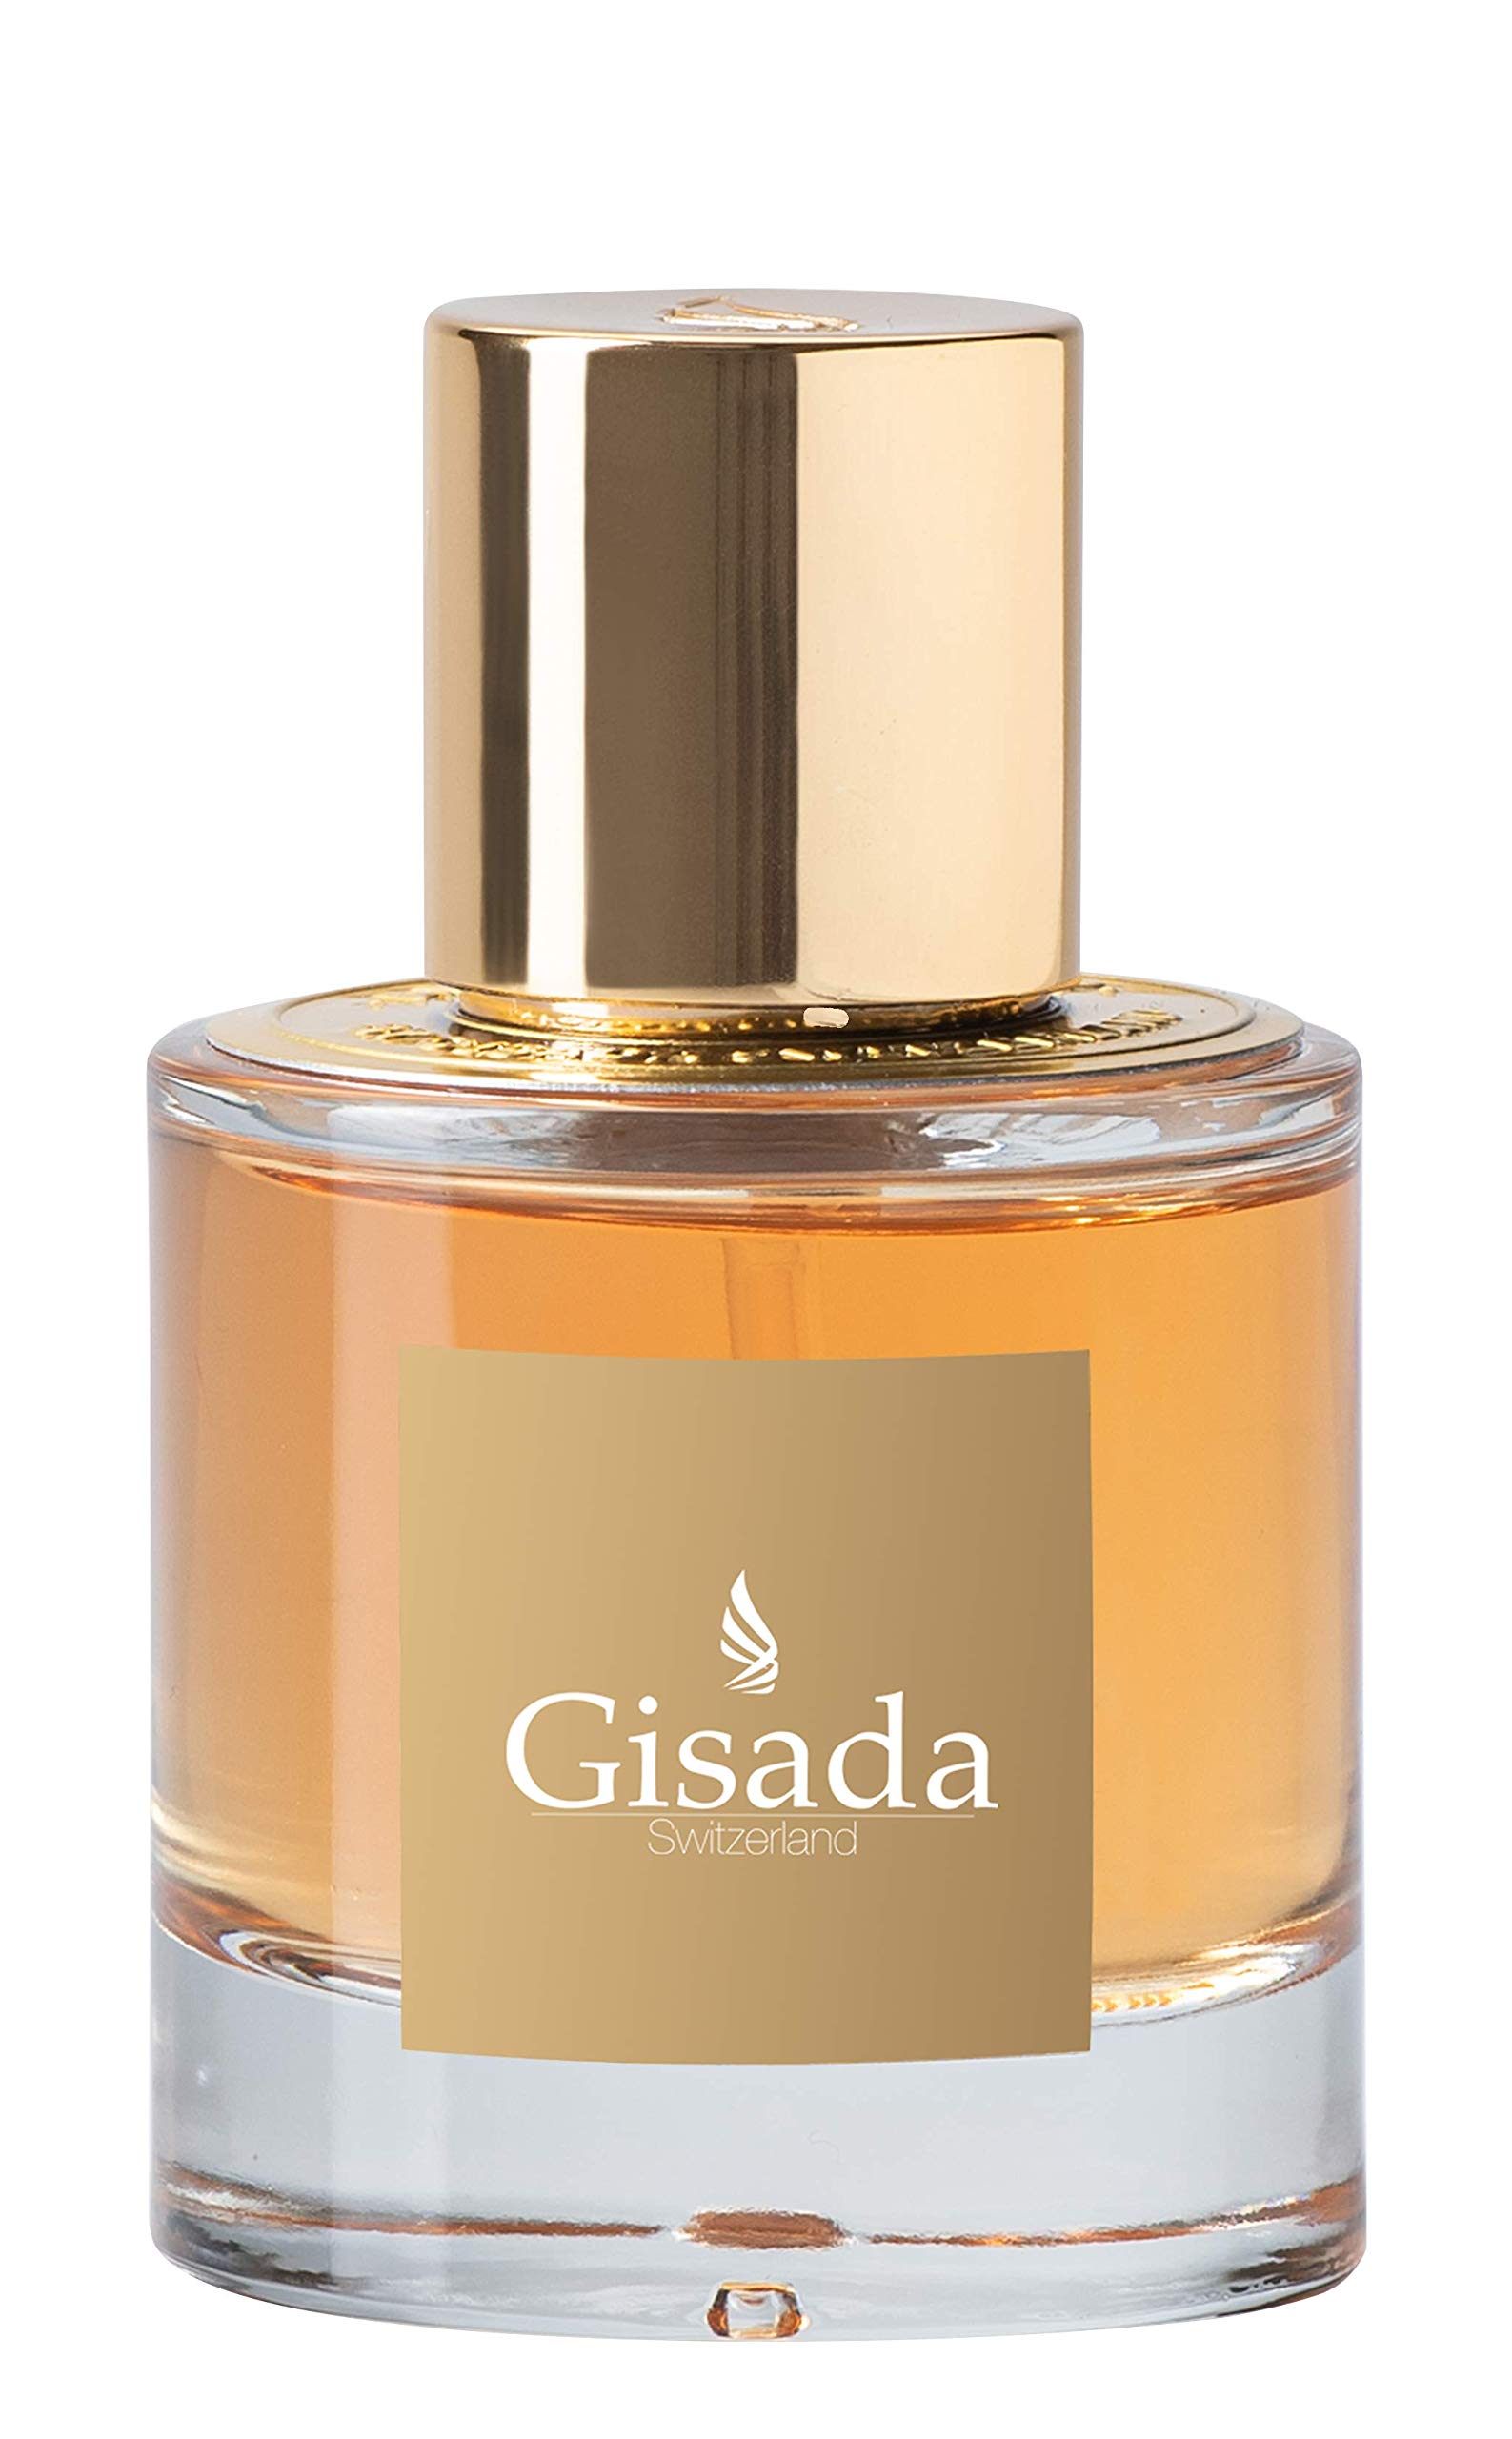 gisada Ambassador Eau de Perfume for Women, 50 ml, gold